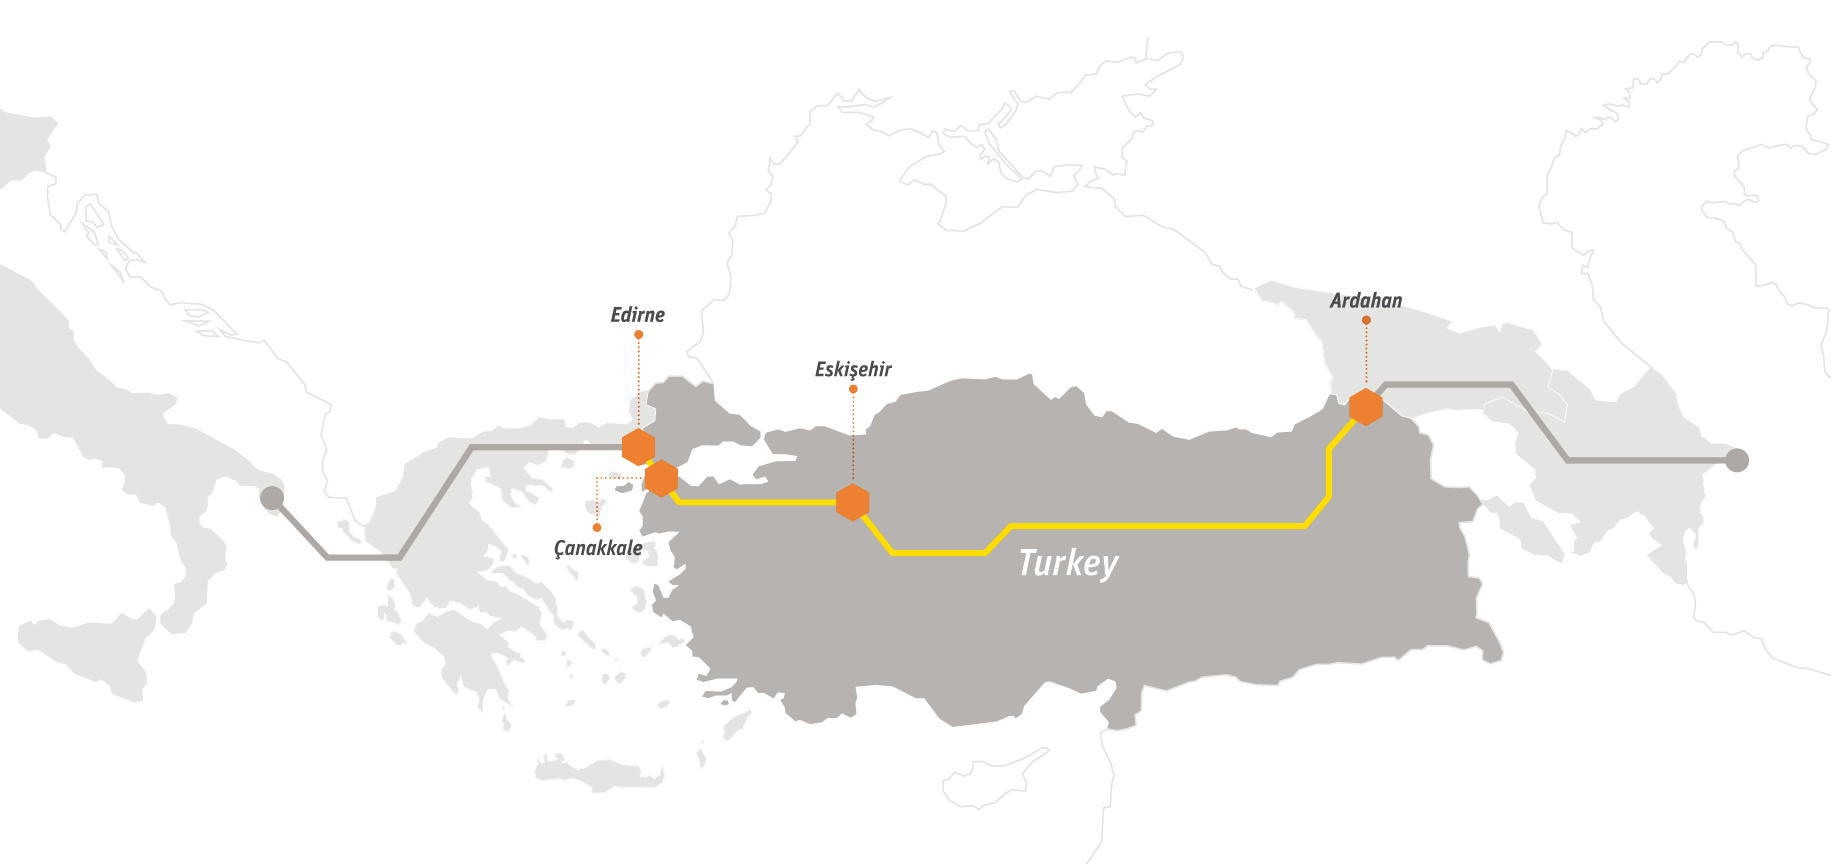 TANAP (Trans-Anatolian Pipe-line Project)